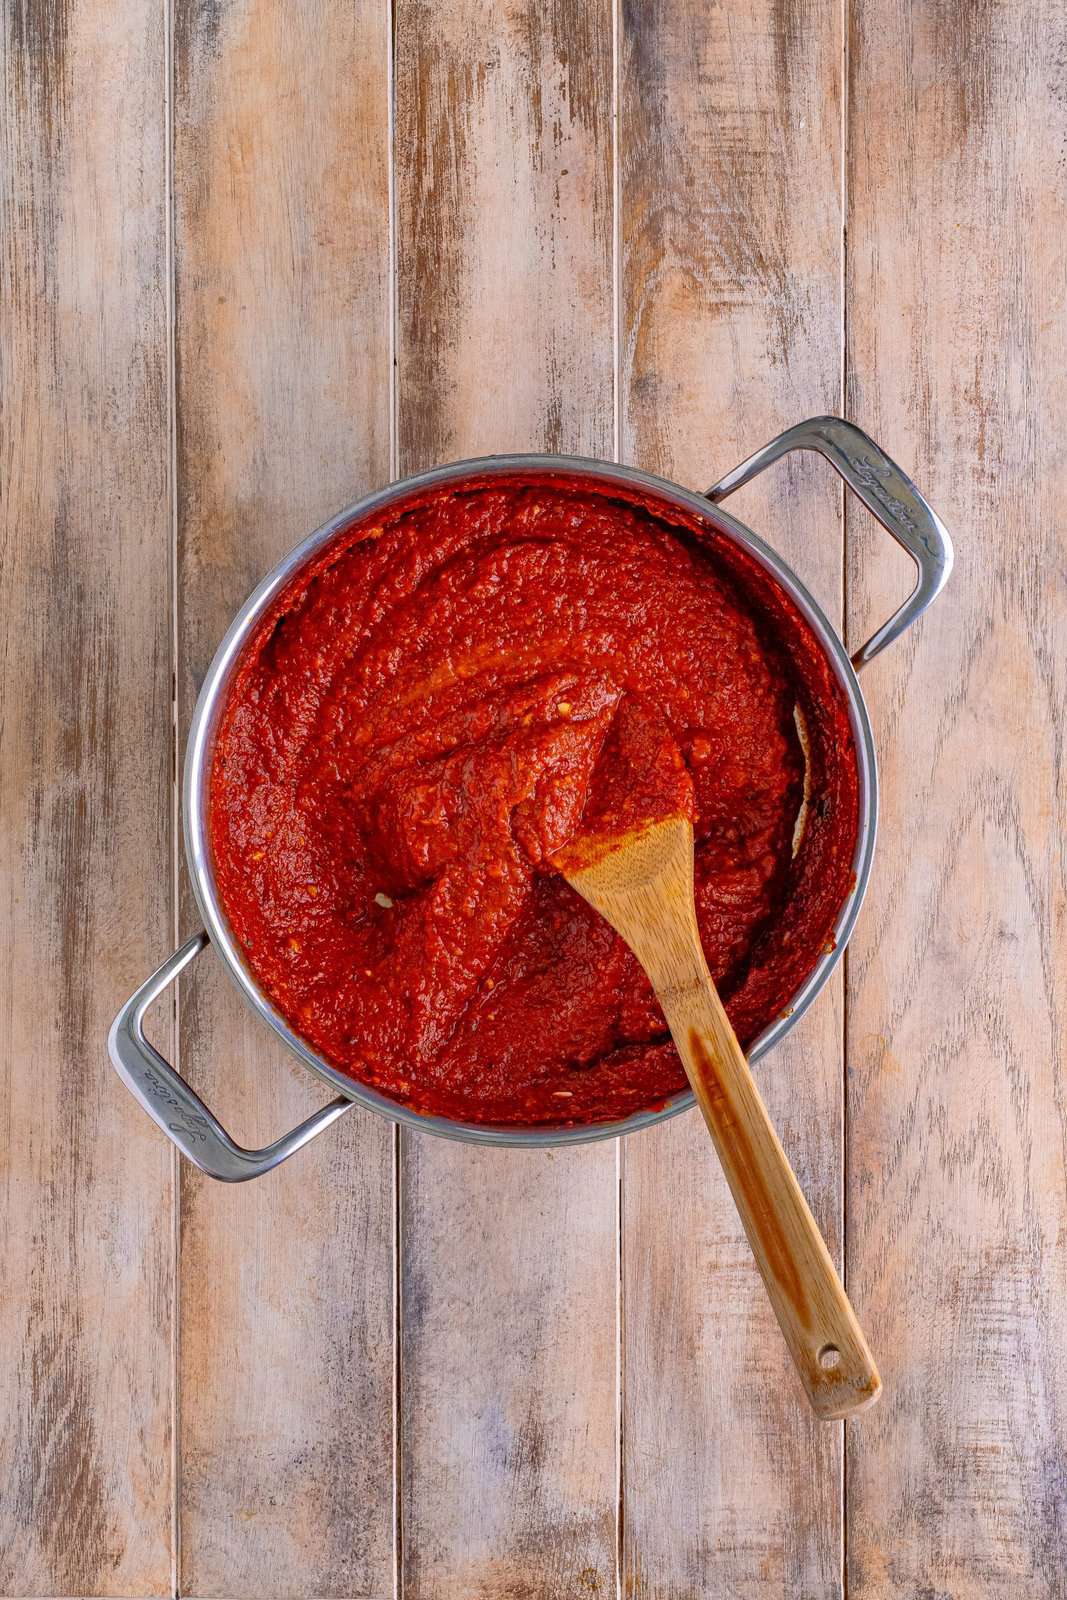 A skillet full of tomato sauce.